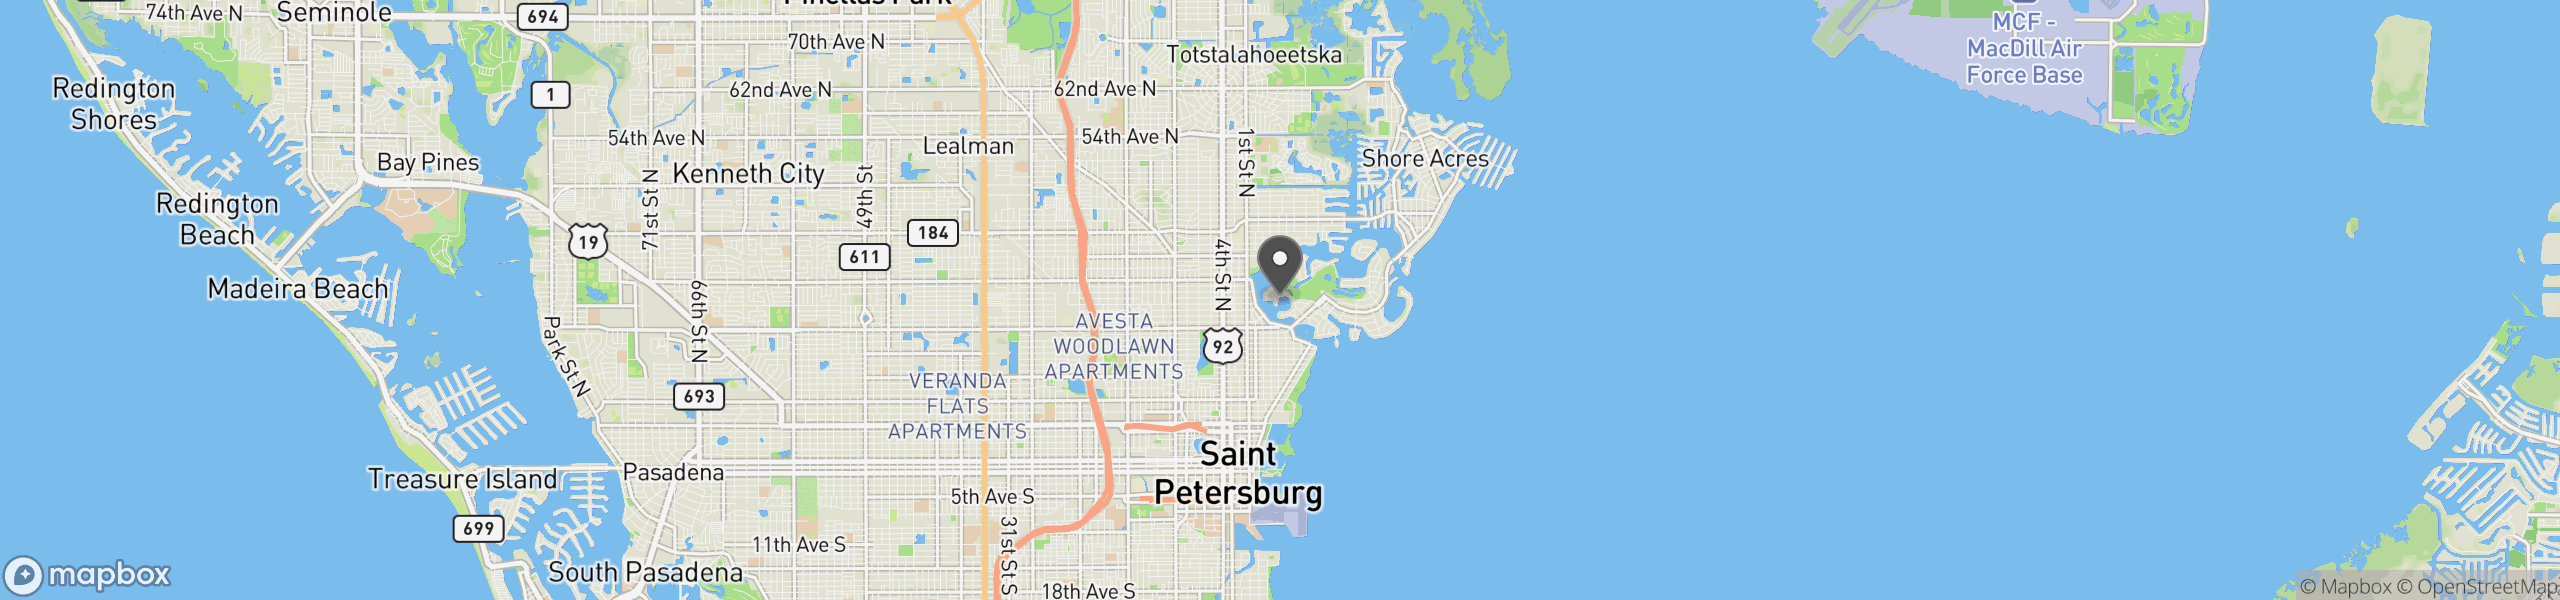 Saint Petersburg, FL